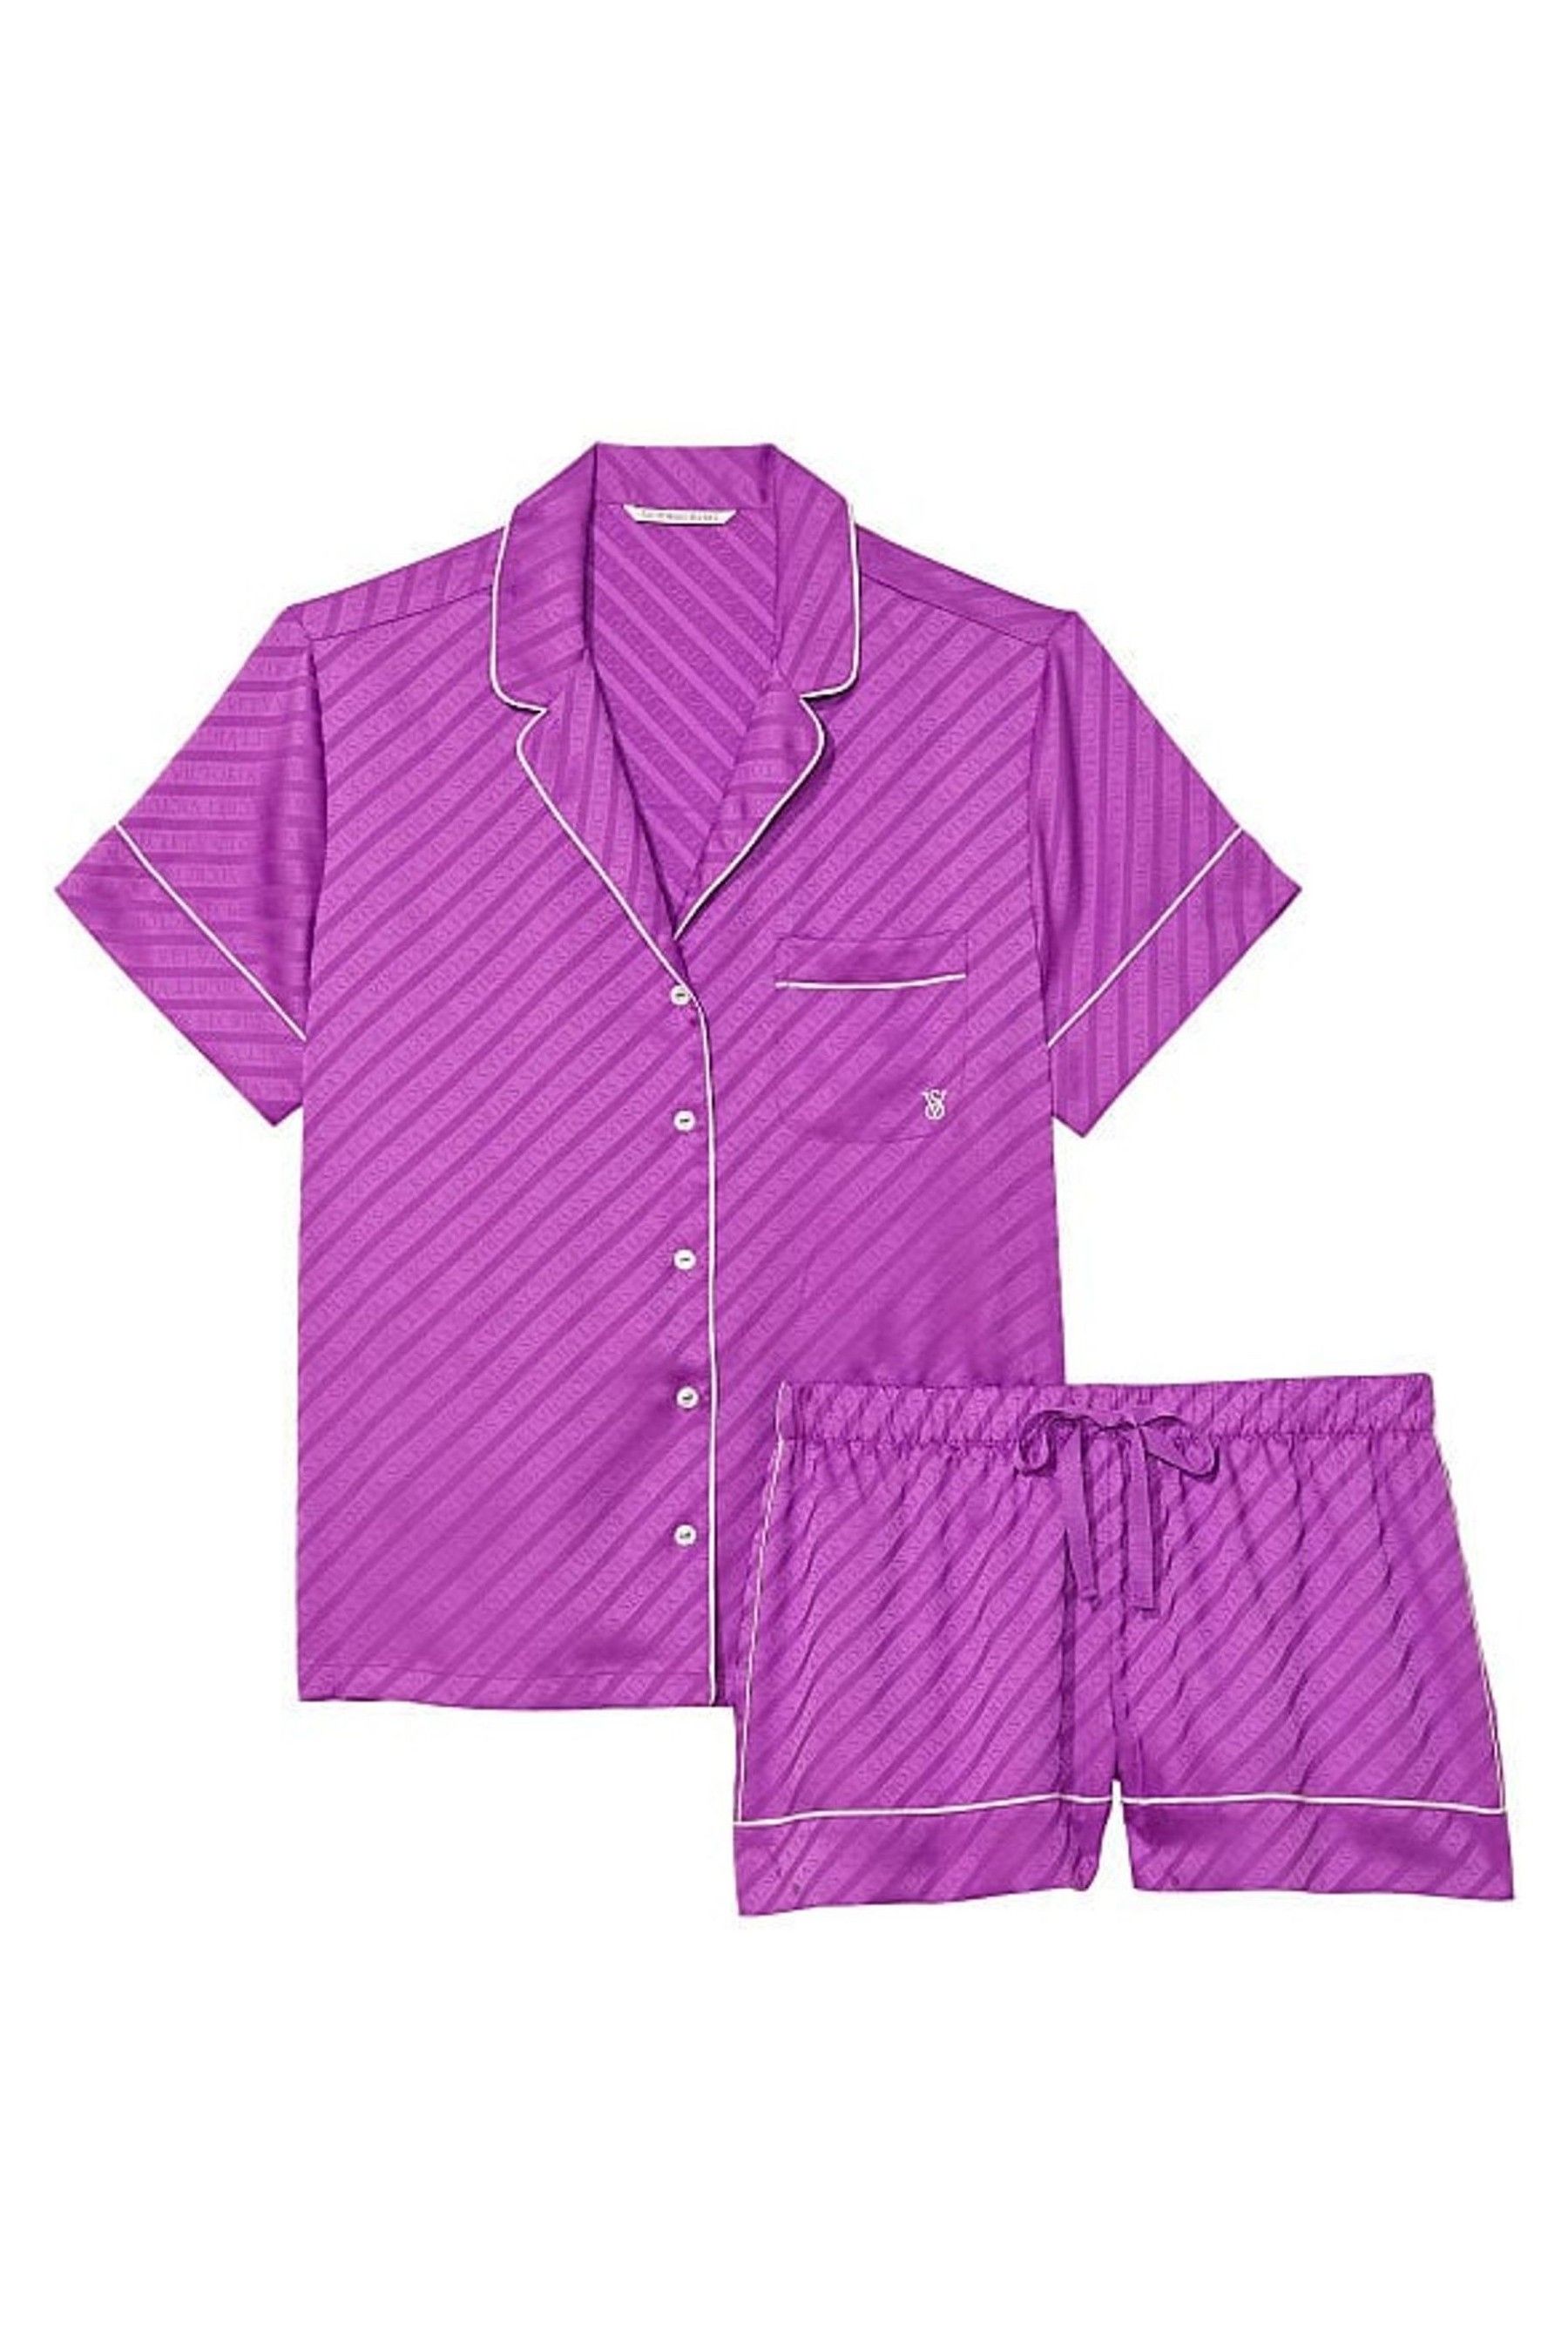 Buy Victoria's Secret Gum Drop Purple Satin Short Pyjamas from the Next ...